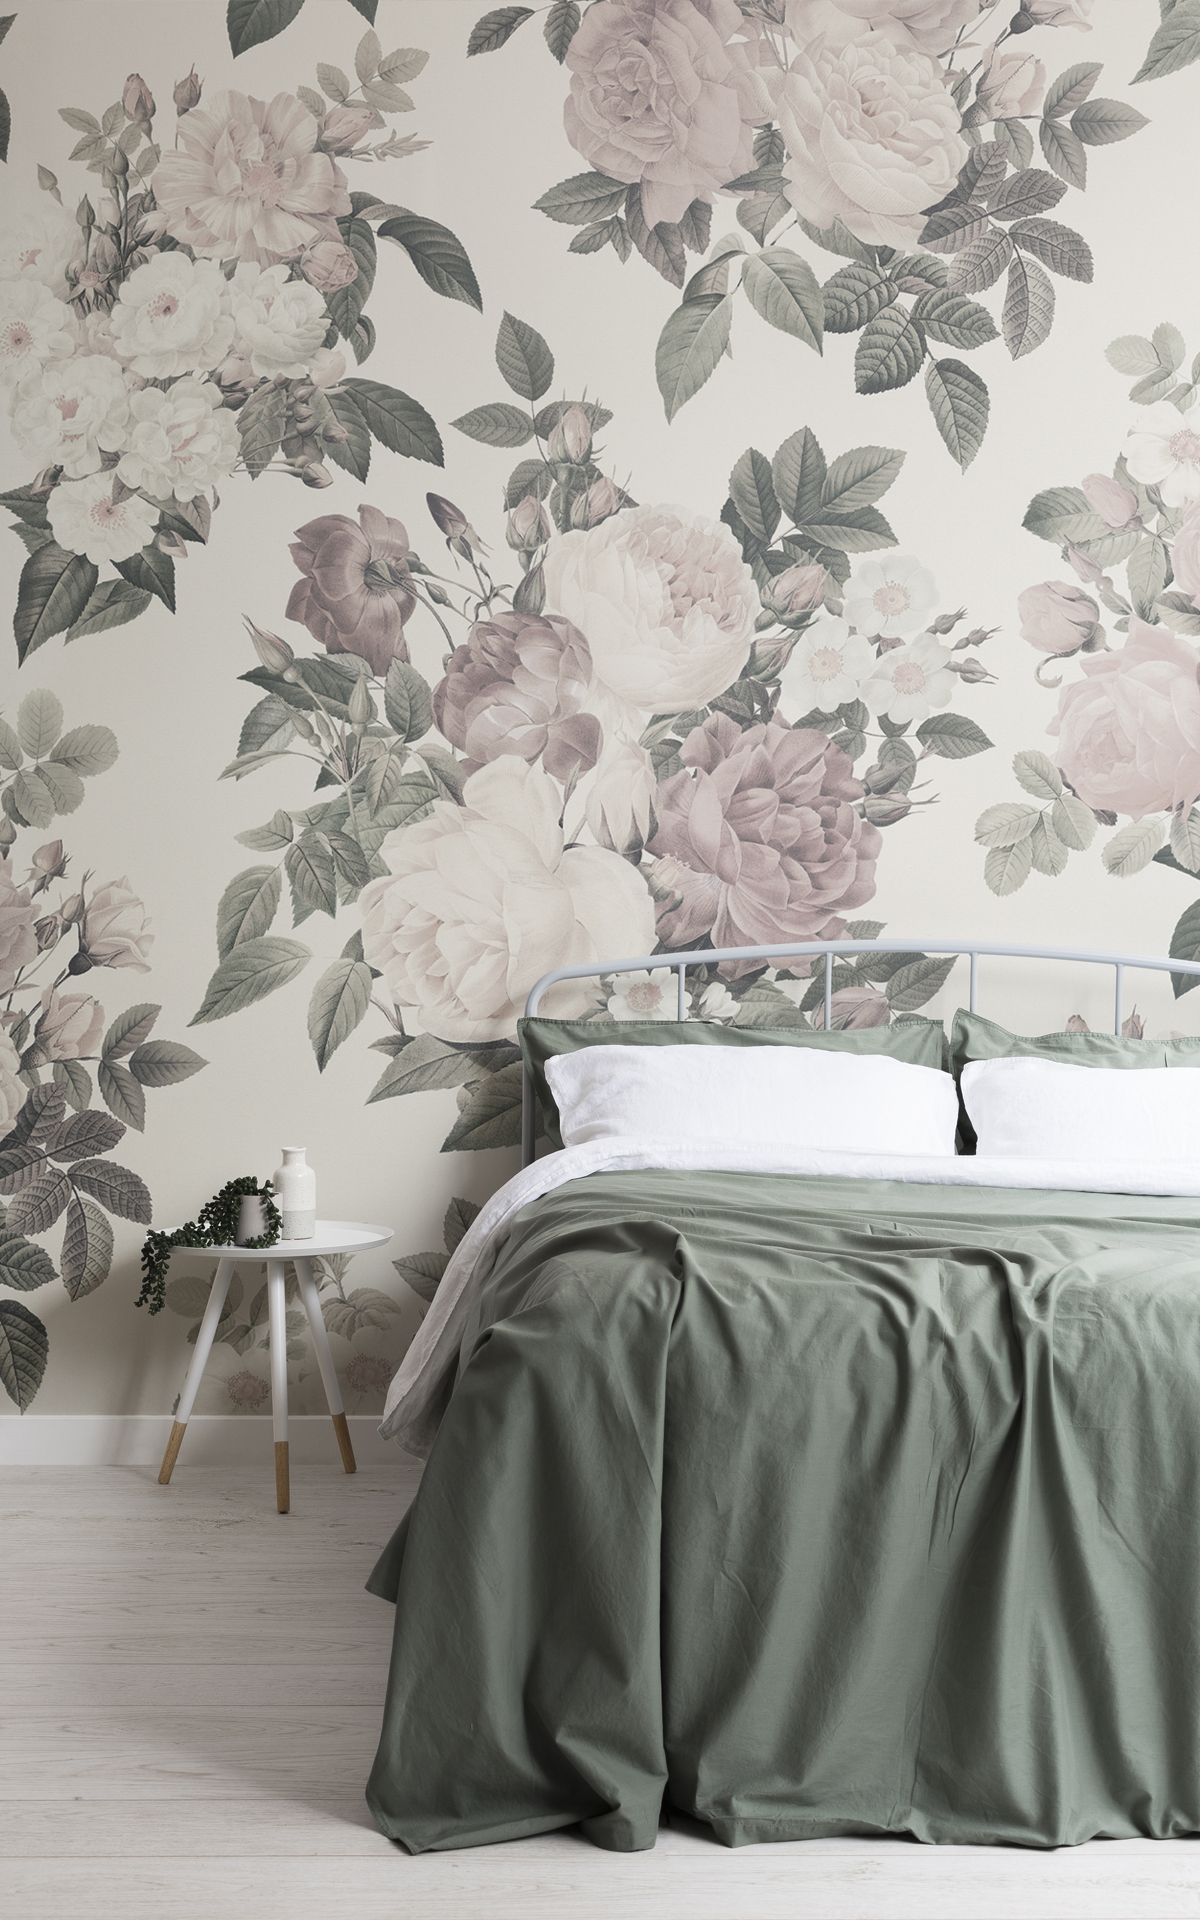 sweet wallpaper,wallpaper,wall,room,interior design,textile